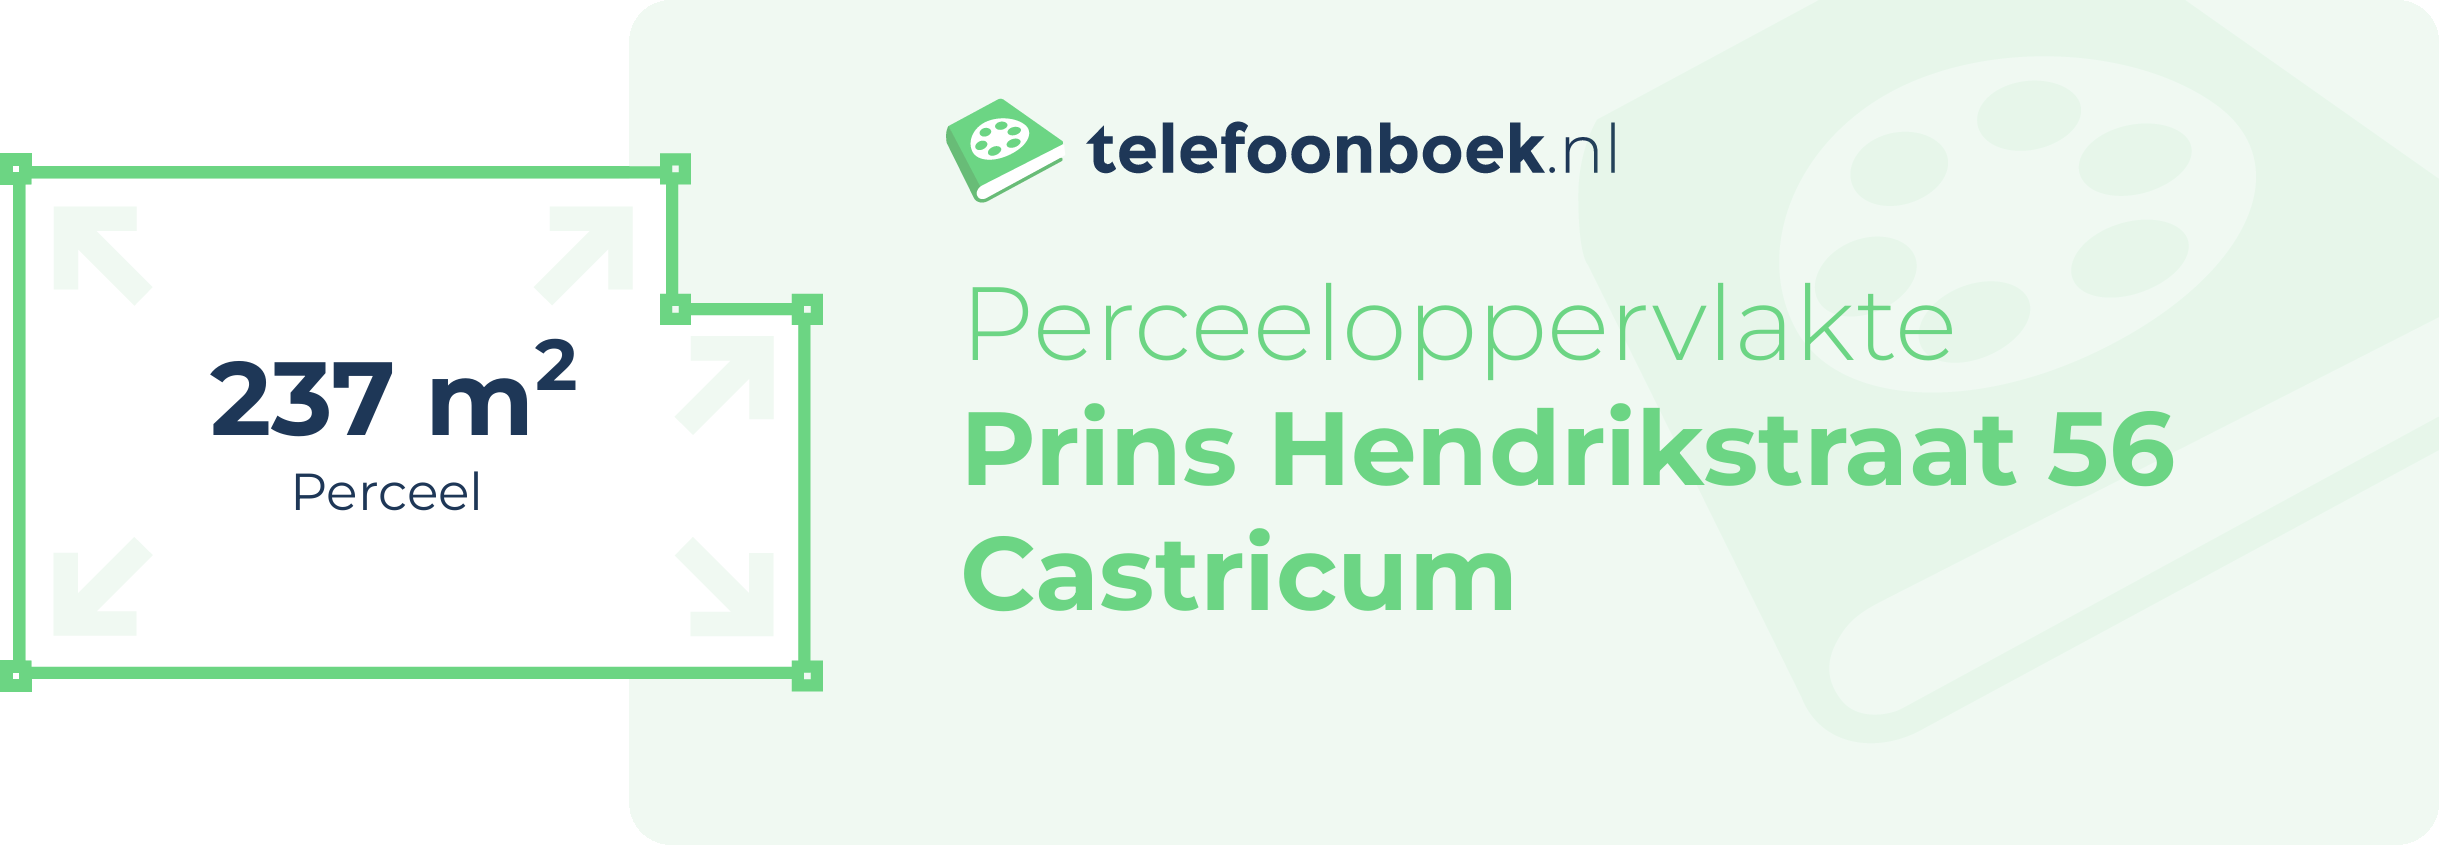 Perceeloppervlakte Prins Hendrikstraat 56 Castricum